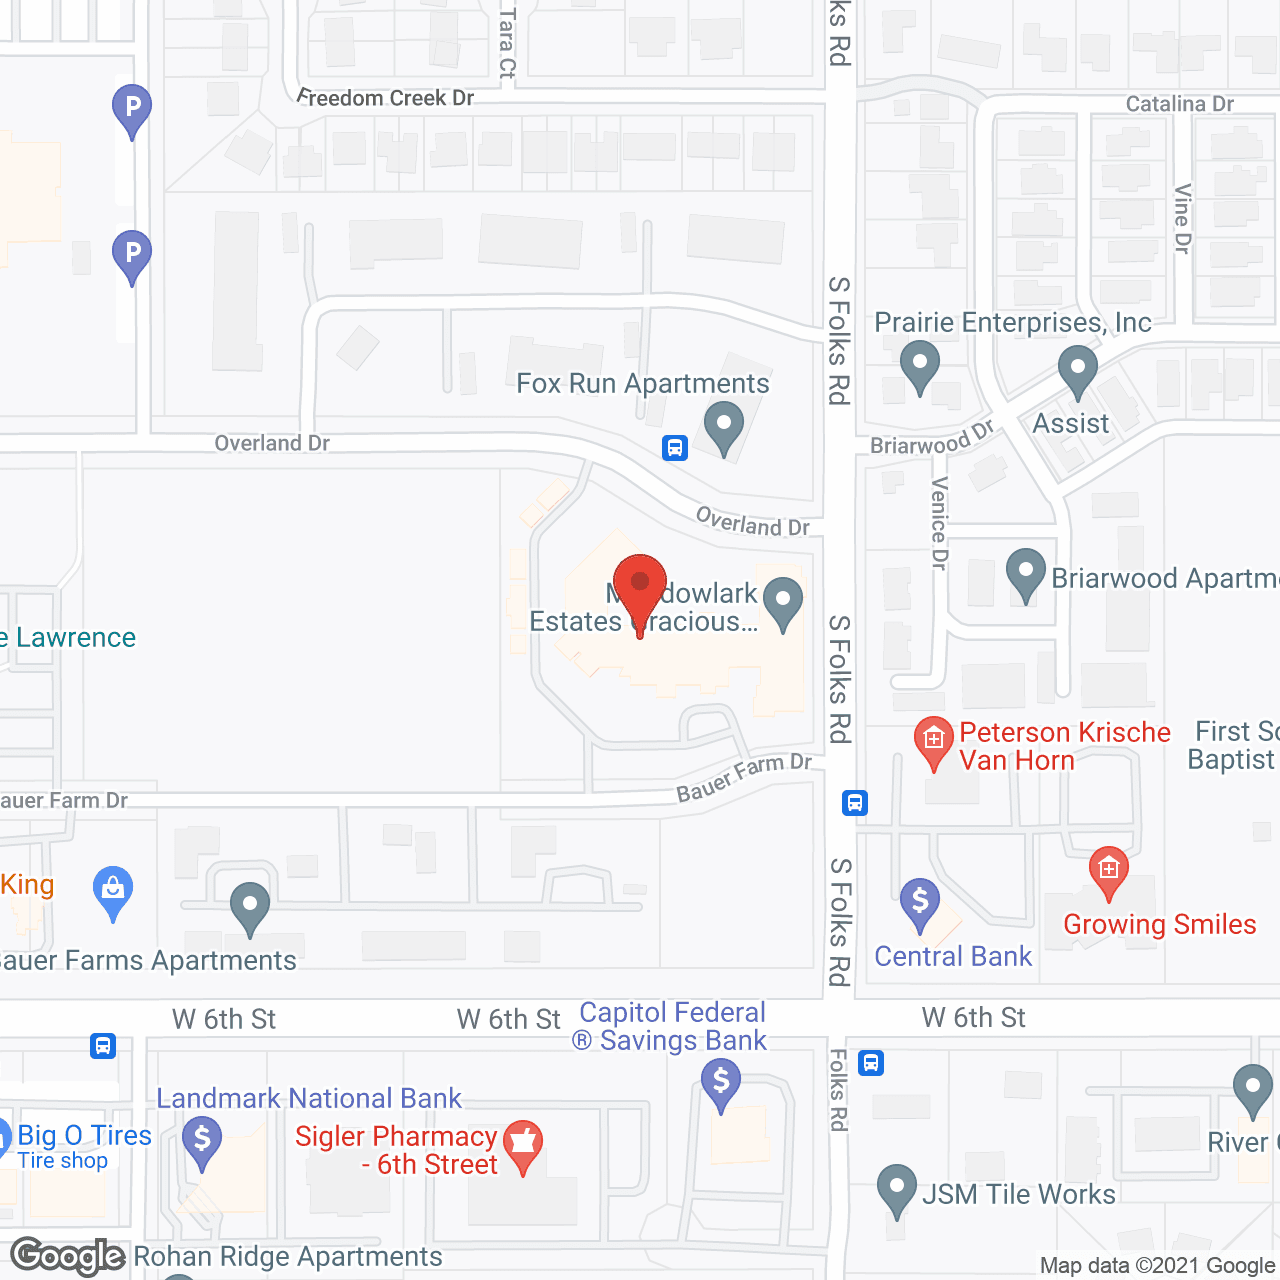 Meadowlark Estates in google map